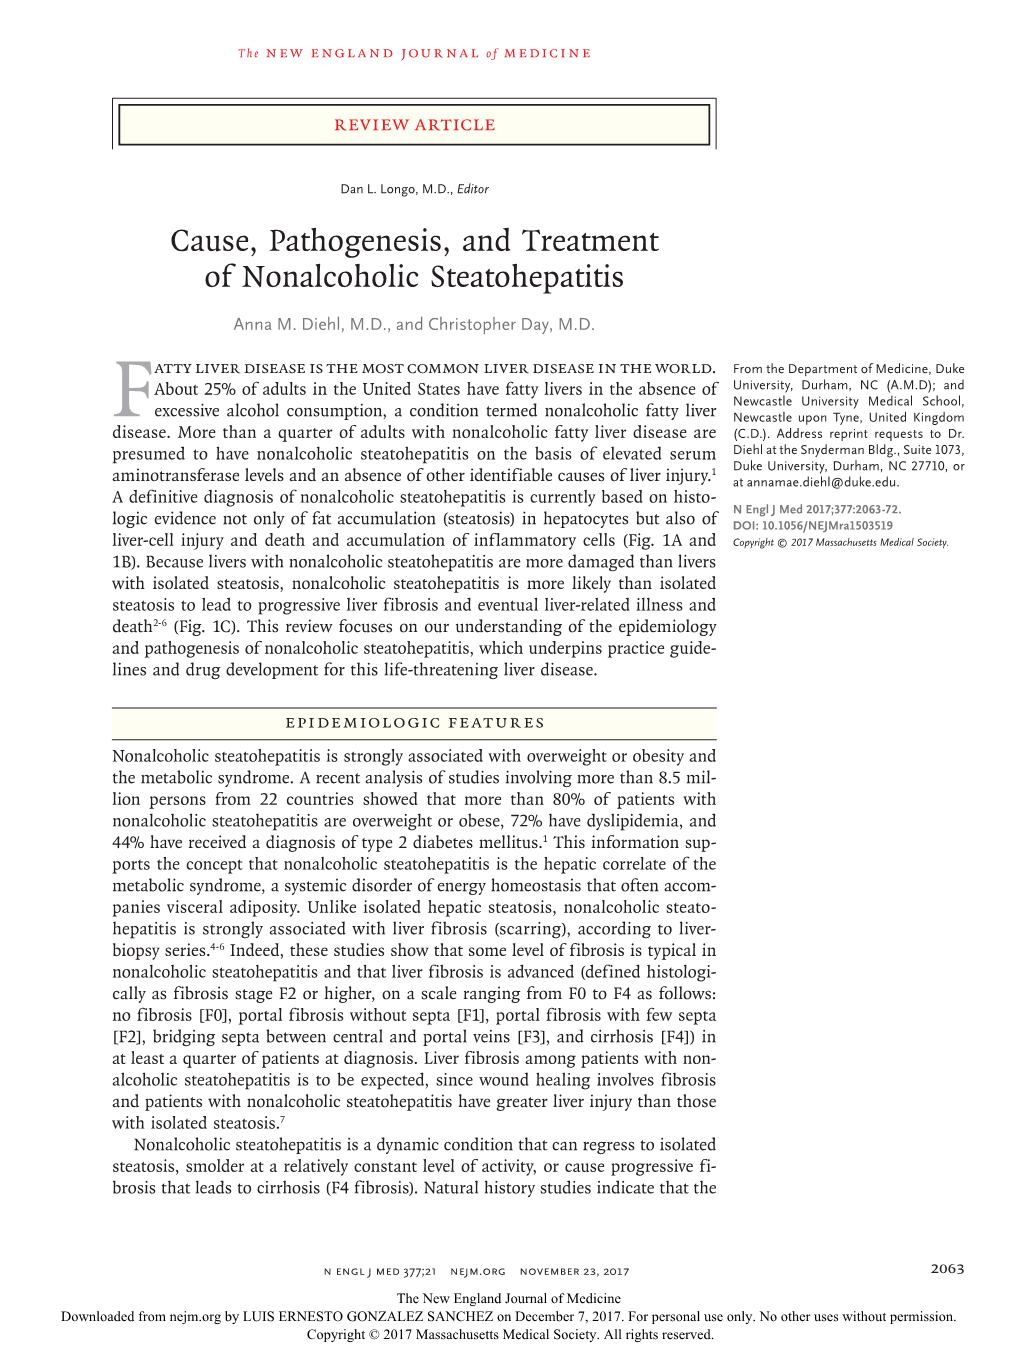 Cause, Pathogenesis, and Treatment of Nonalcoholic Steatohepatitis